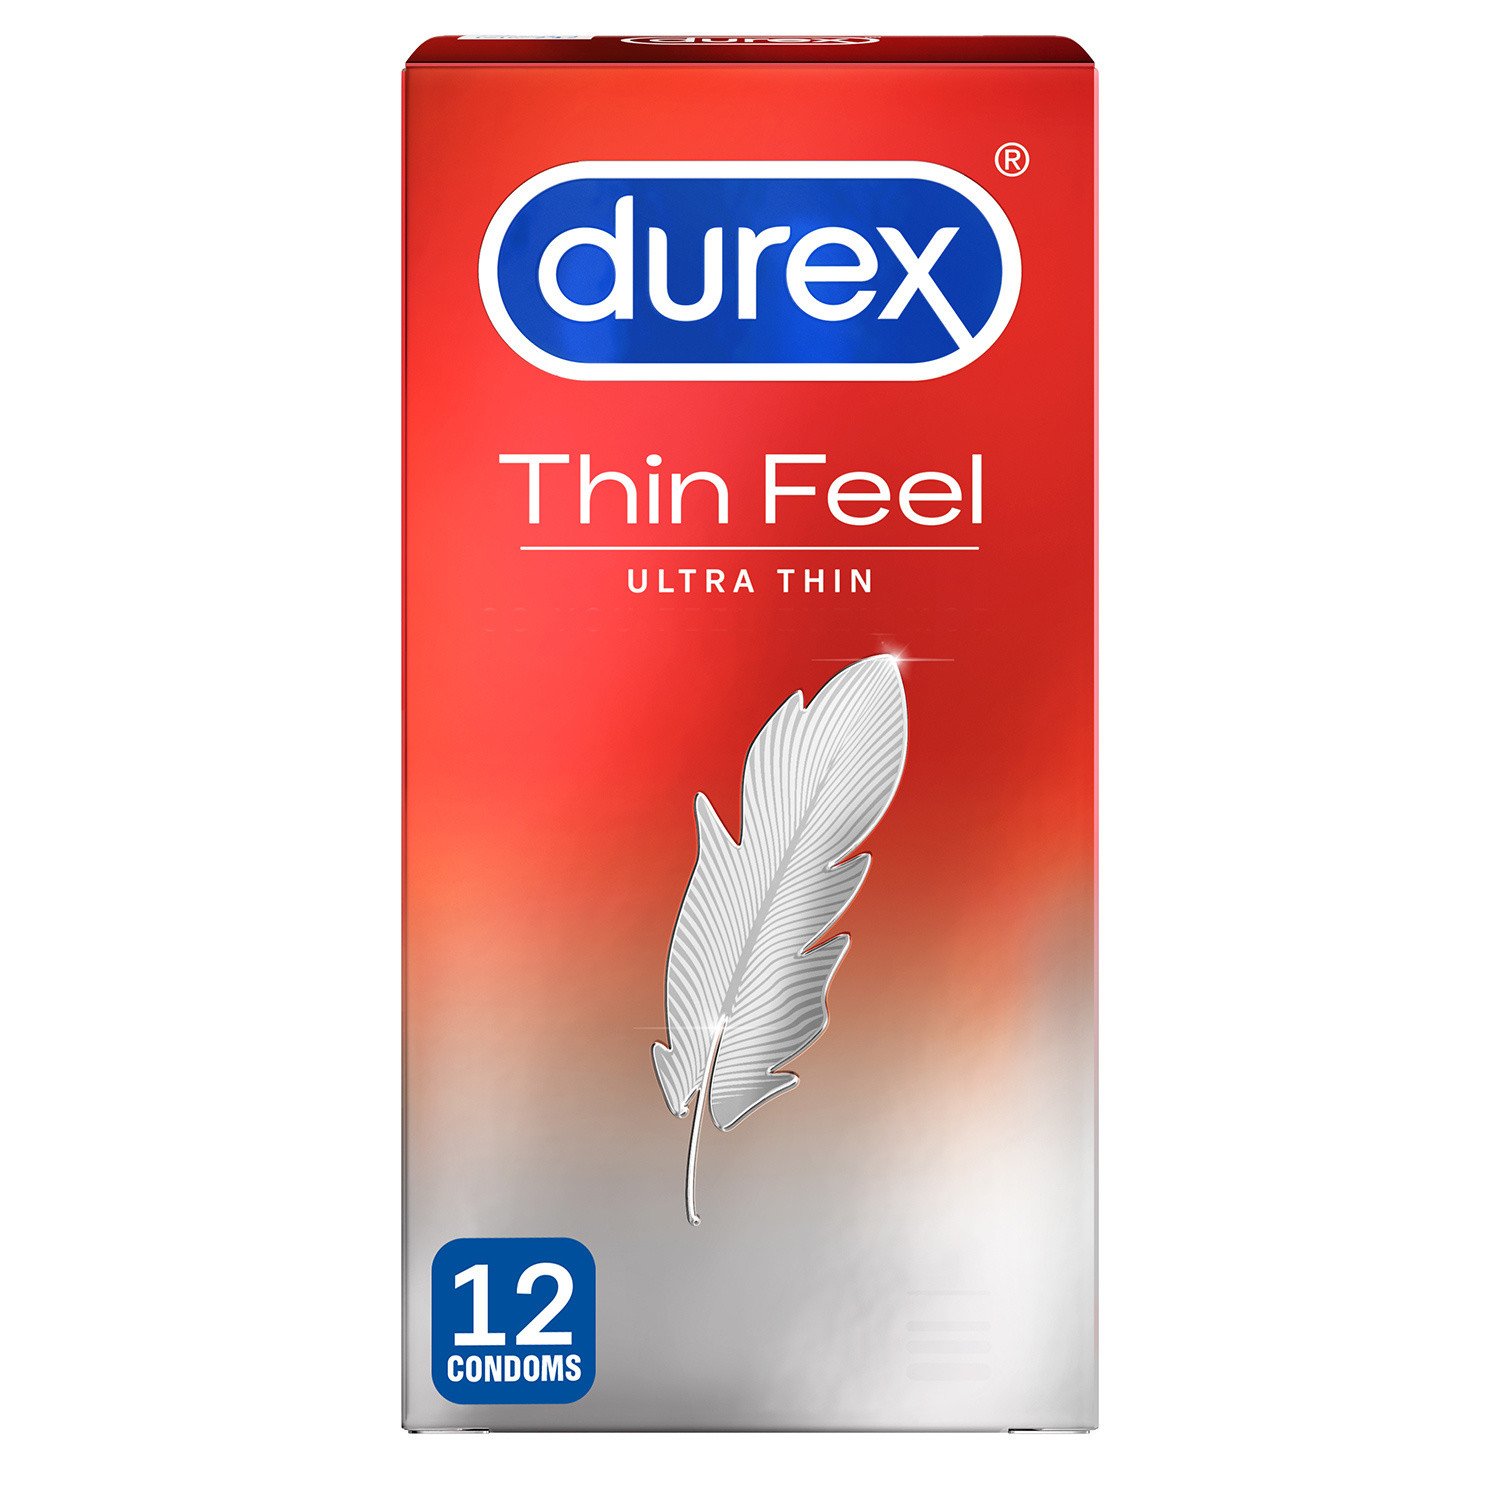 Durex Thin Feel Ultra Thin - 12 Condoms